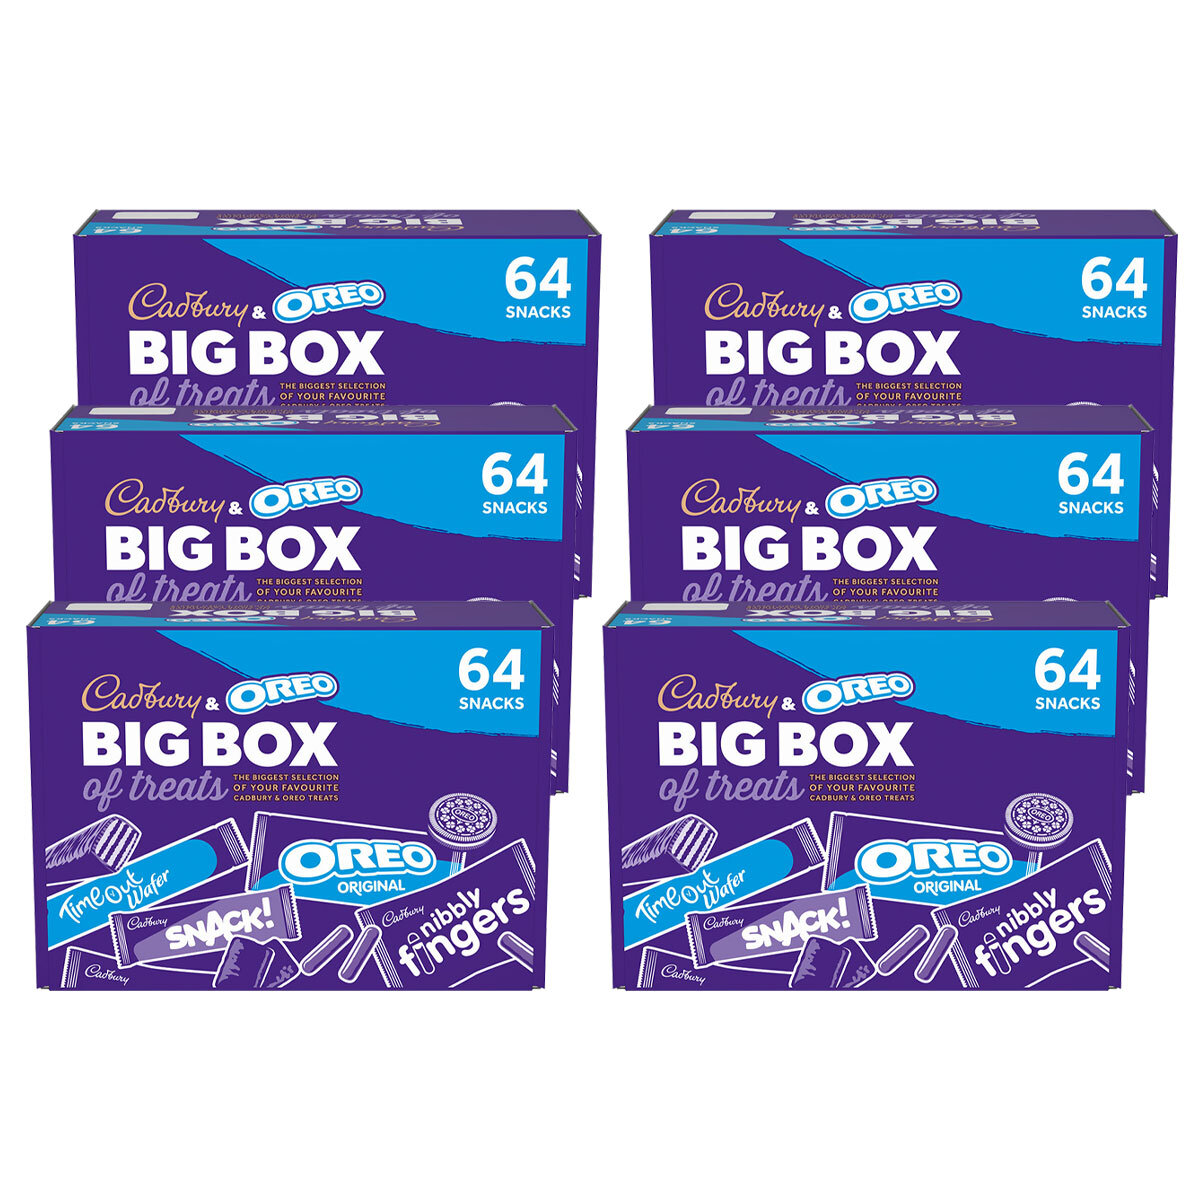 Cadbury & Oreo Big Box Of Treats, 6 x 64 Snacks